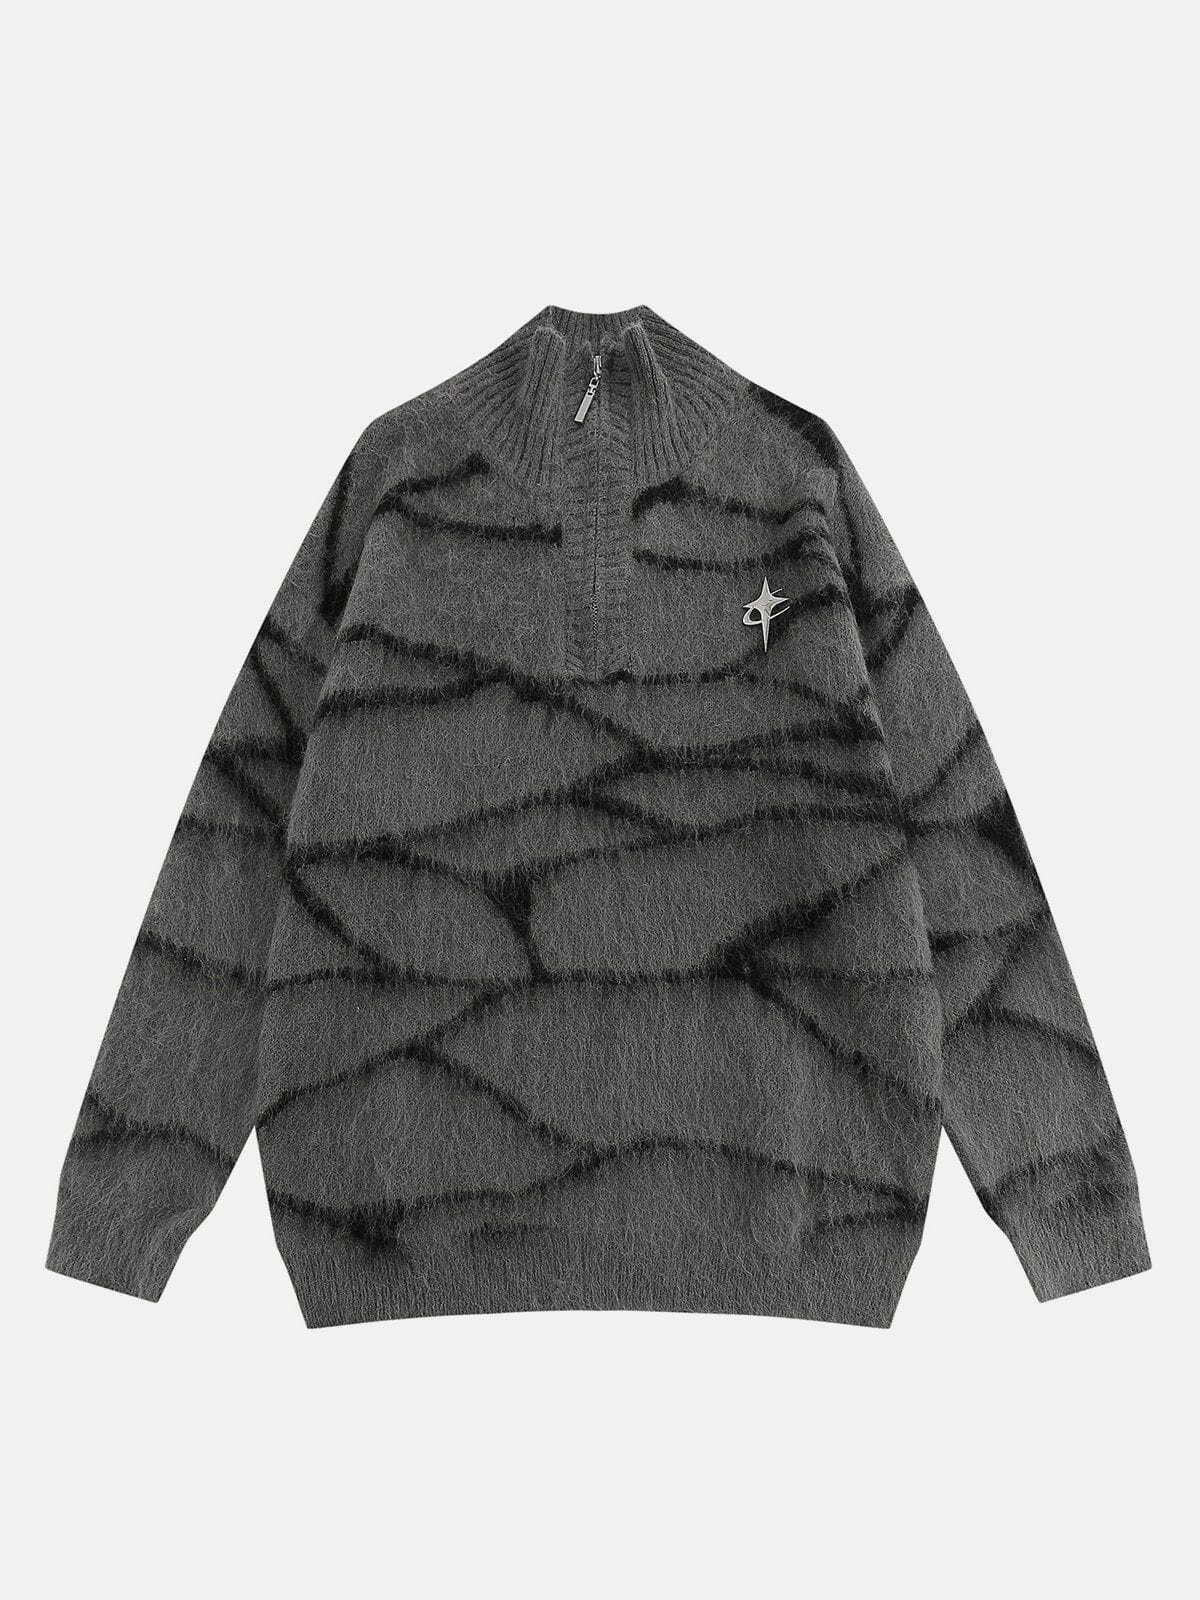 retro fuzzy turtleneck sweater urban chic 8650